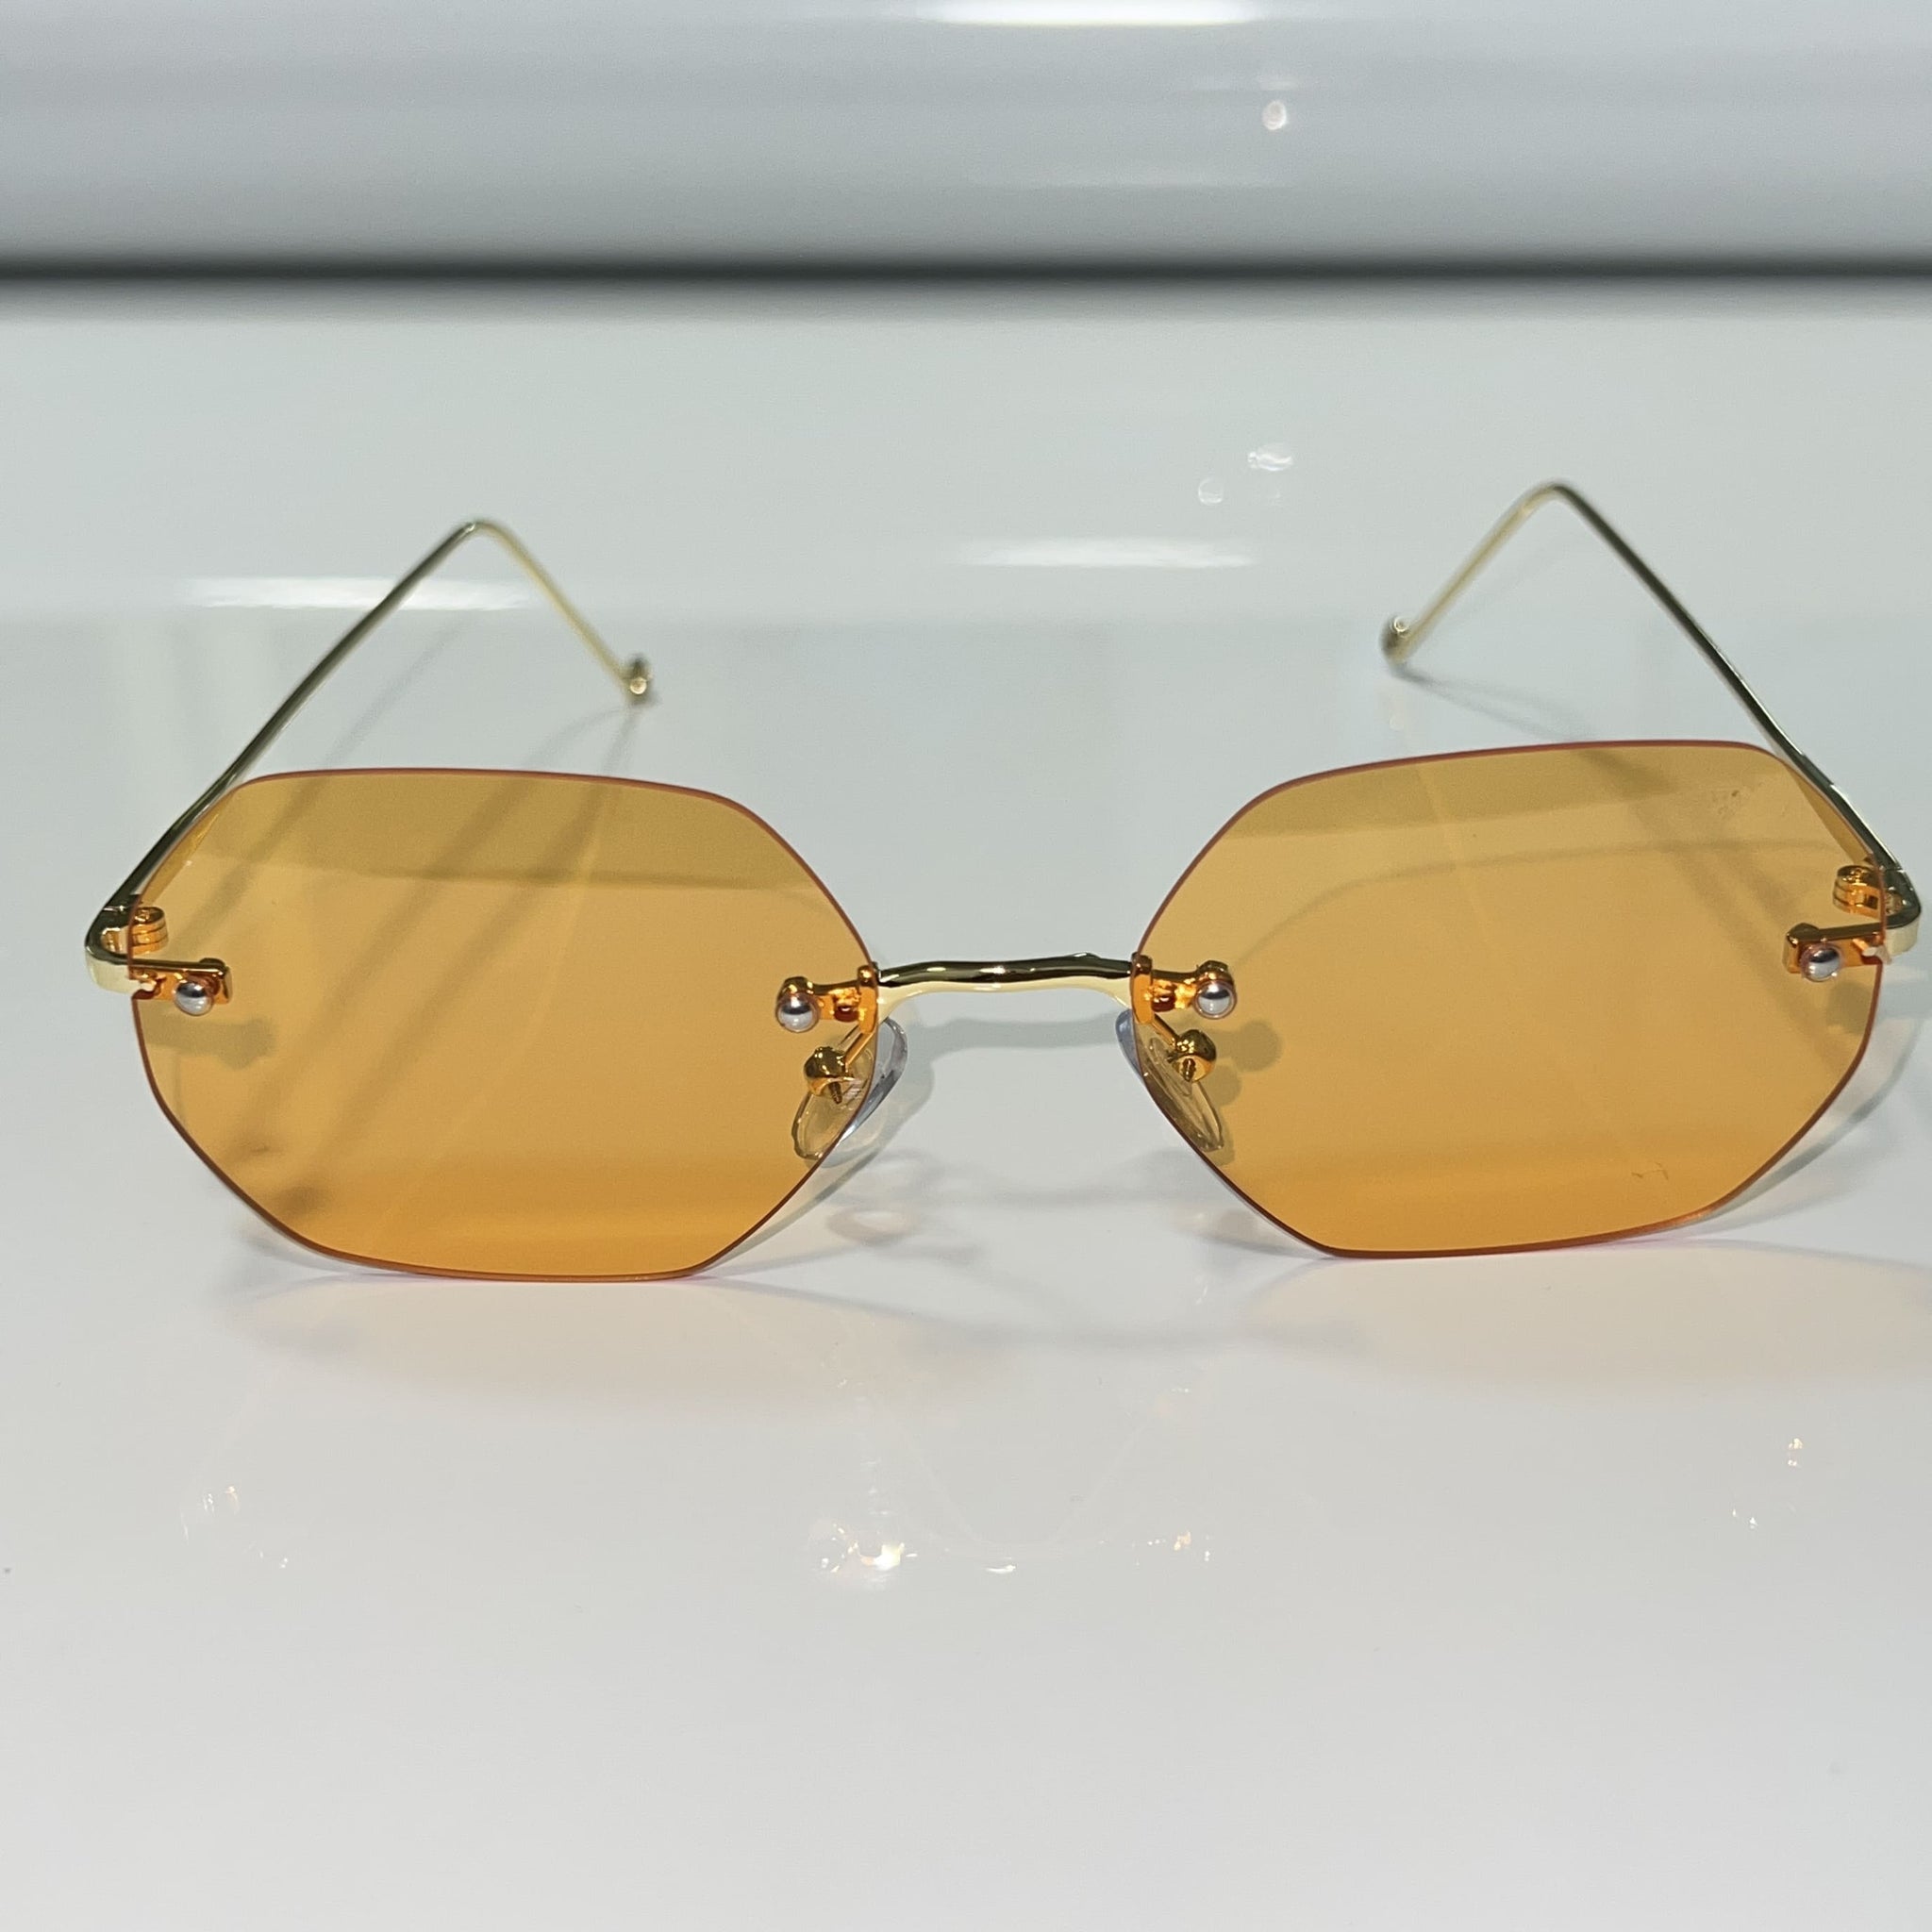 Star Glasses - Sehgal Glasses - 14k gold plated - Orange Shade